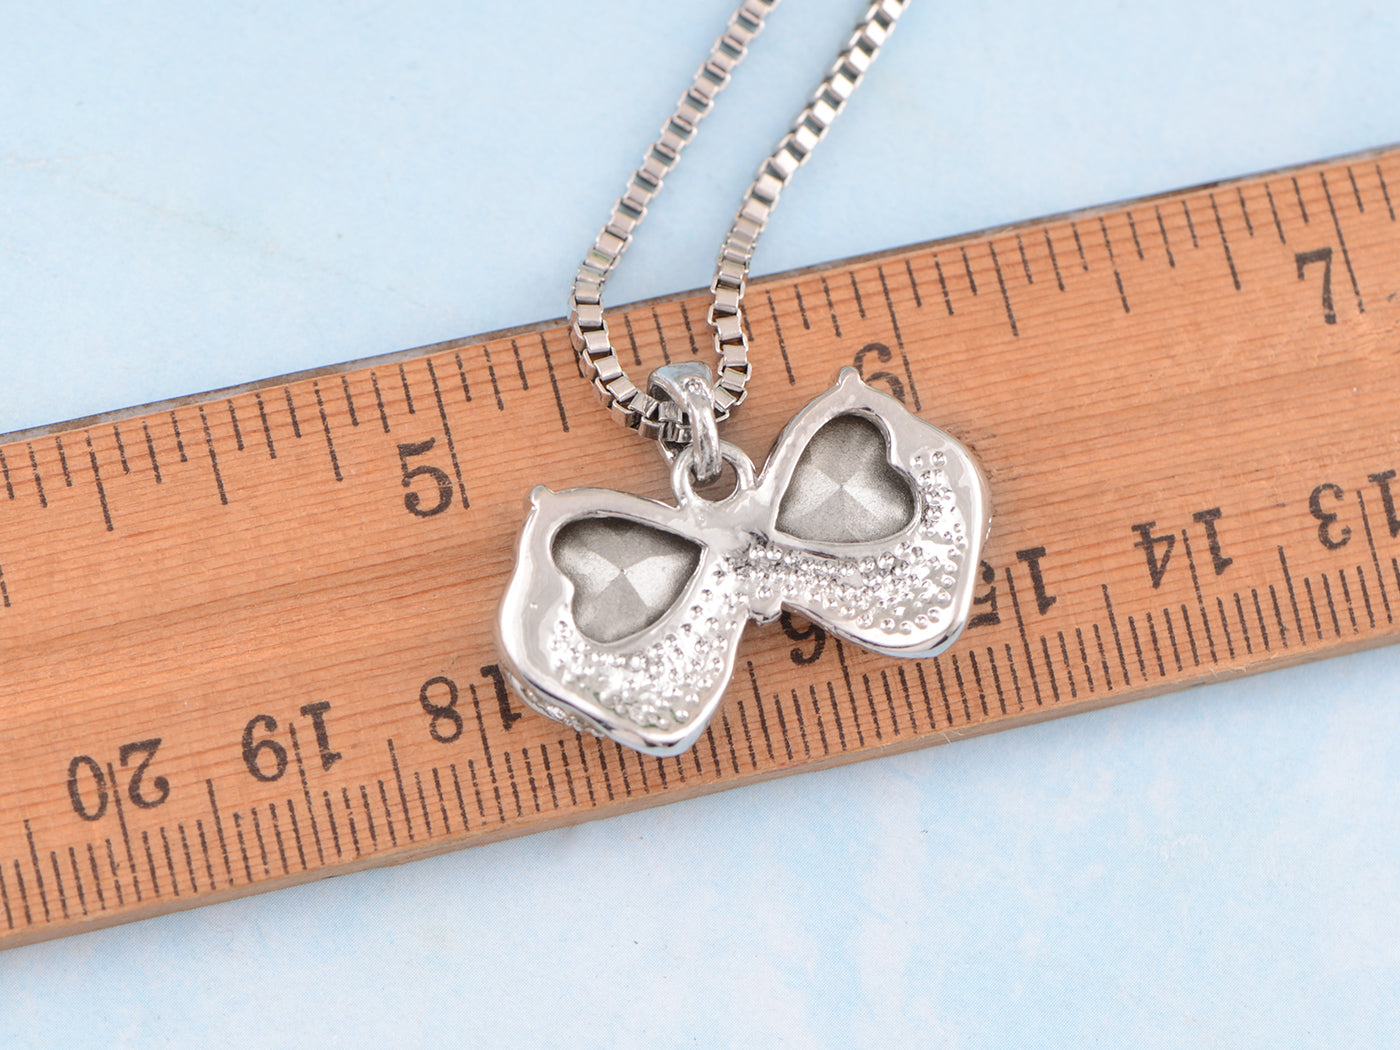 Swarovski Crystal Element Encrusted Classic Bow Pendant Necklace